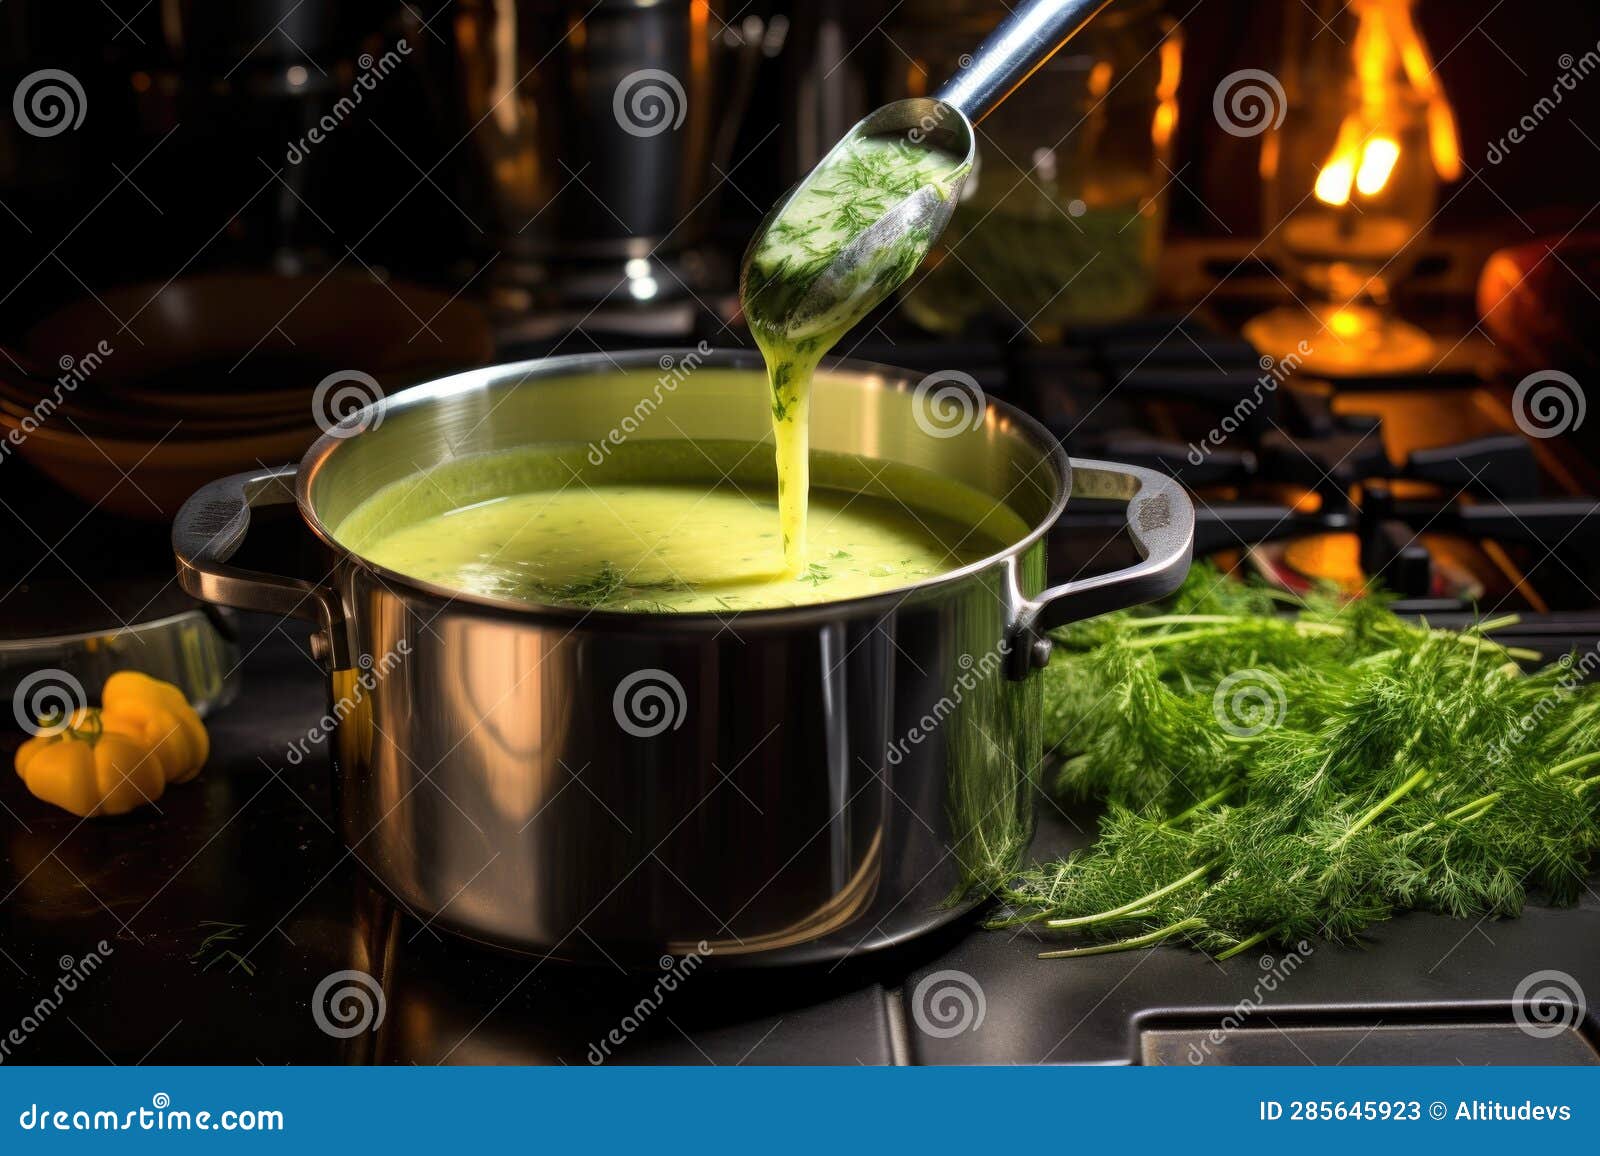 Immersion Blender Blending Soup in Pot Stock Image - Image of generated ...